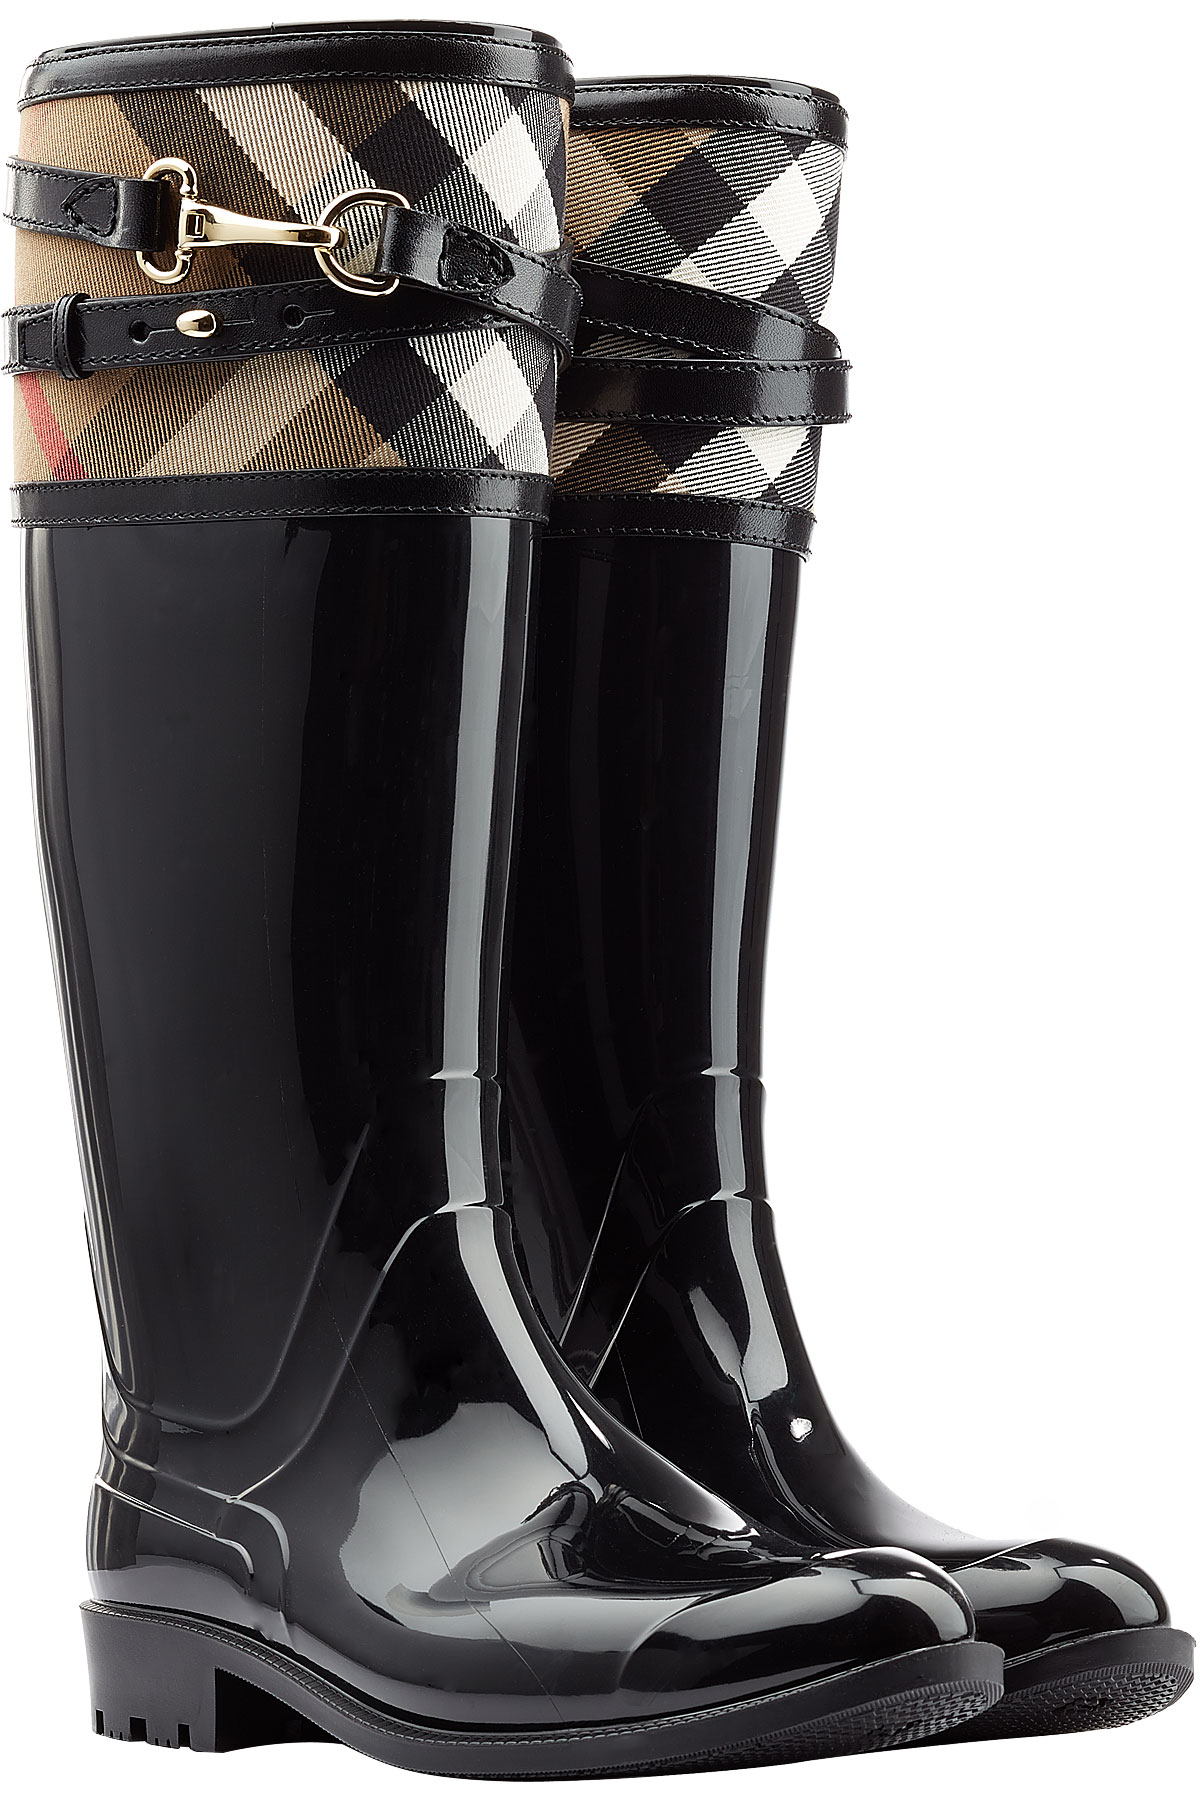 Designer Rain Boots Women - Yu Boots